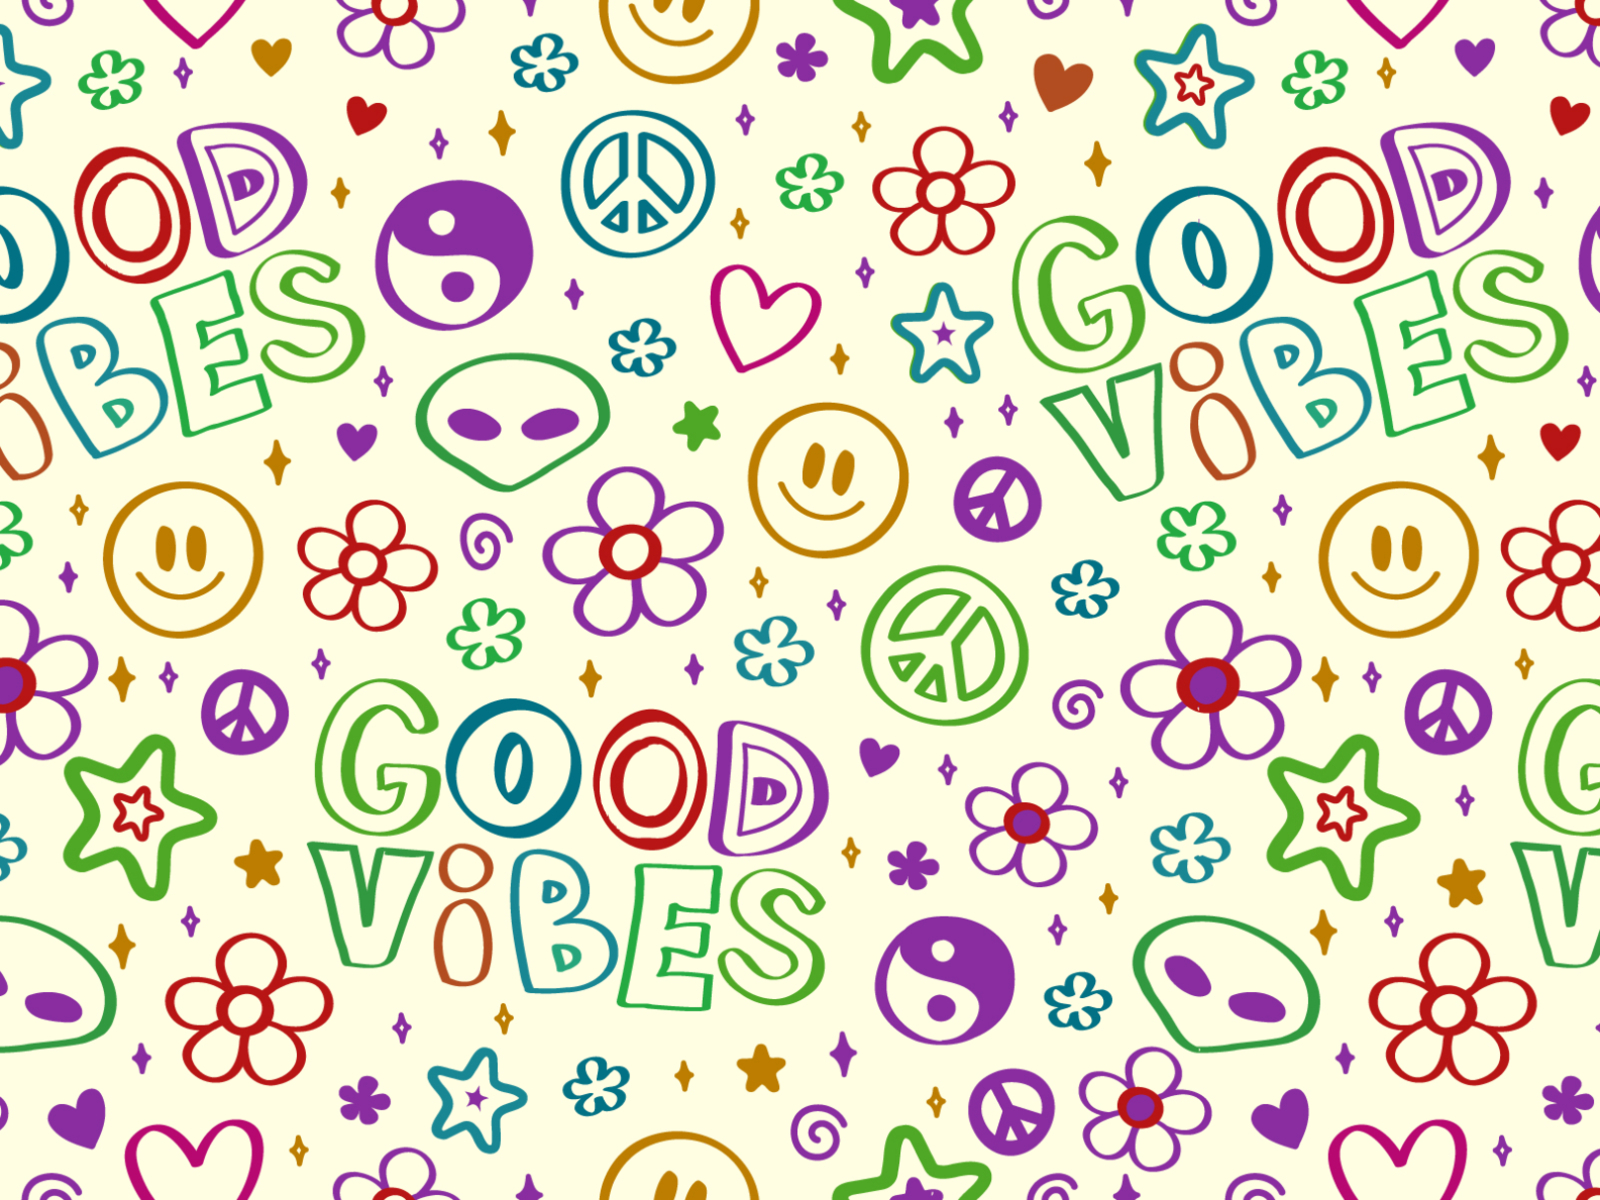 Good vibes wallpaper by UhhJairo  Download on ZEDGE  e863